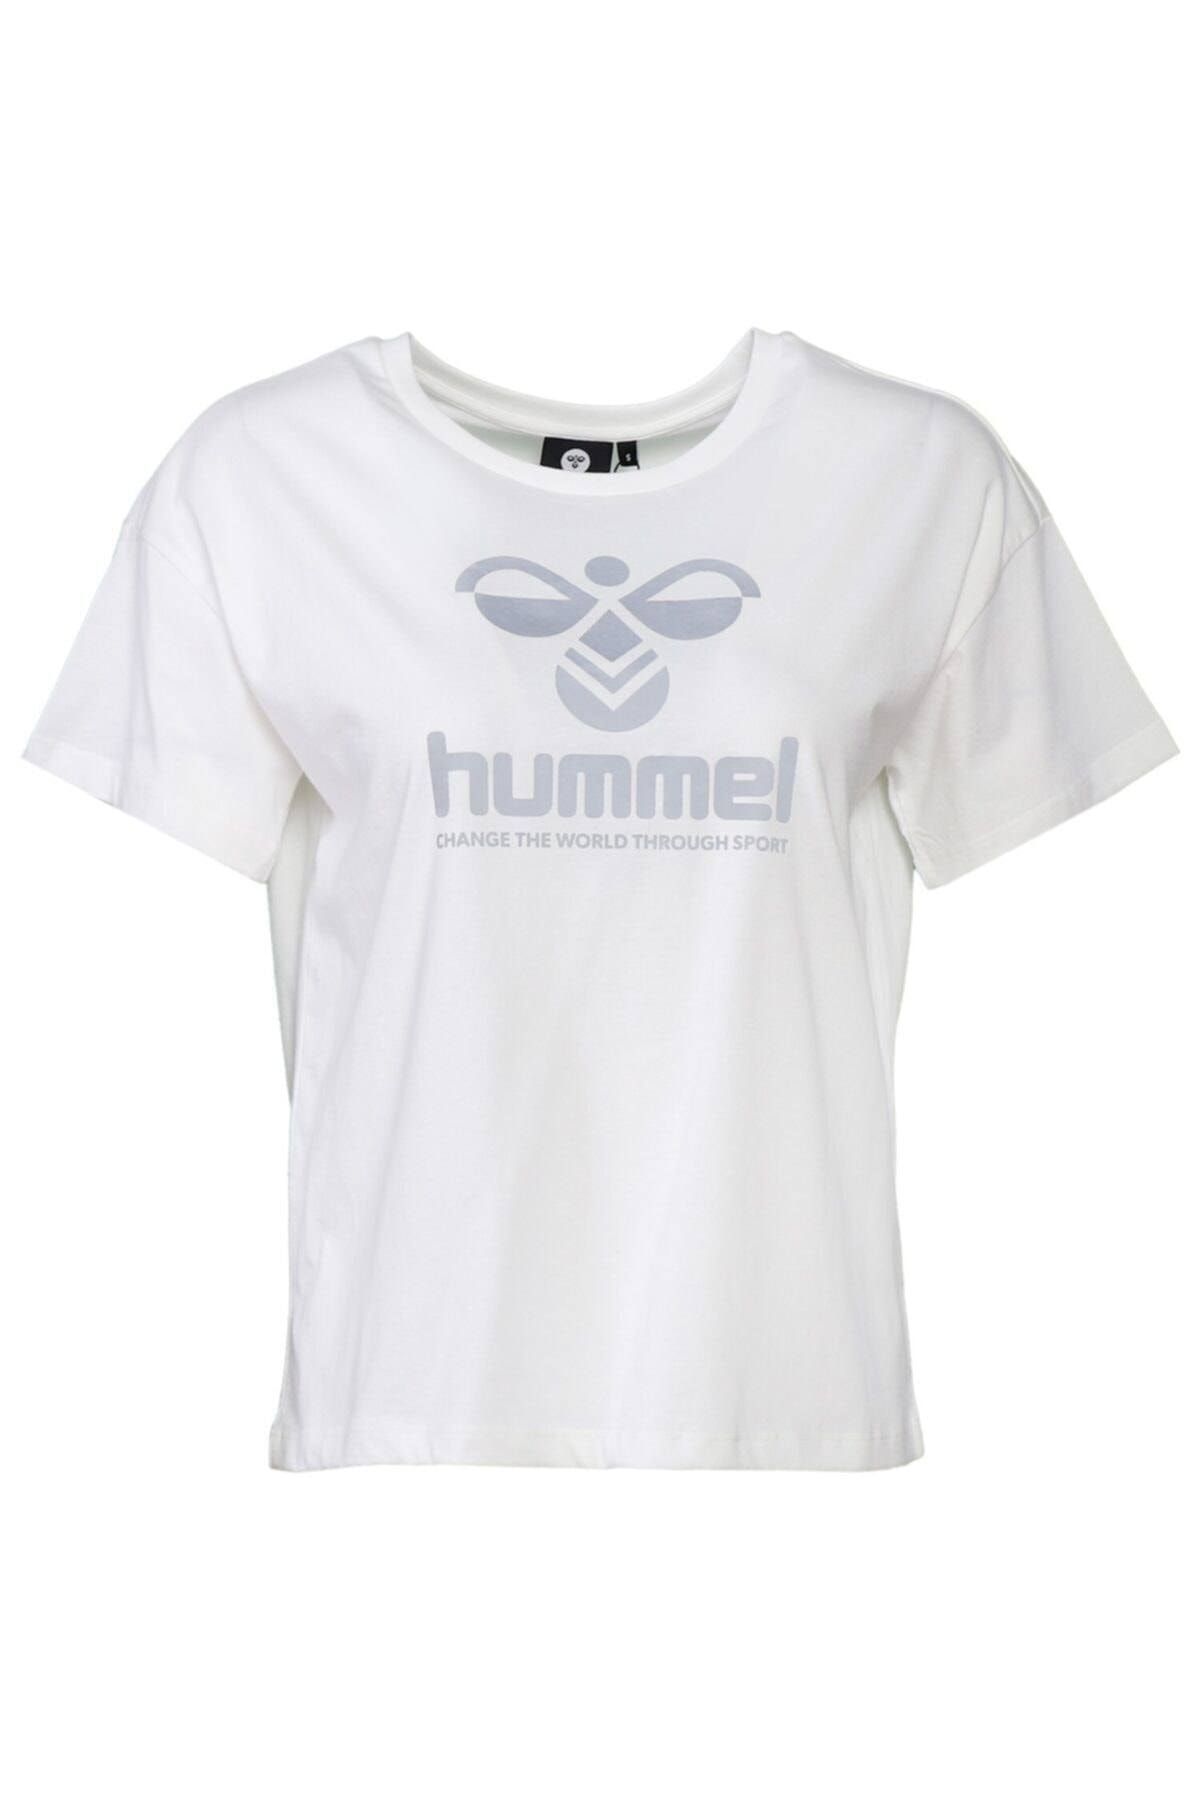 hummel HMLVODER Beyaz Kadın T-Shirt 101085892